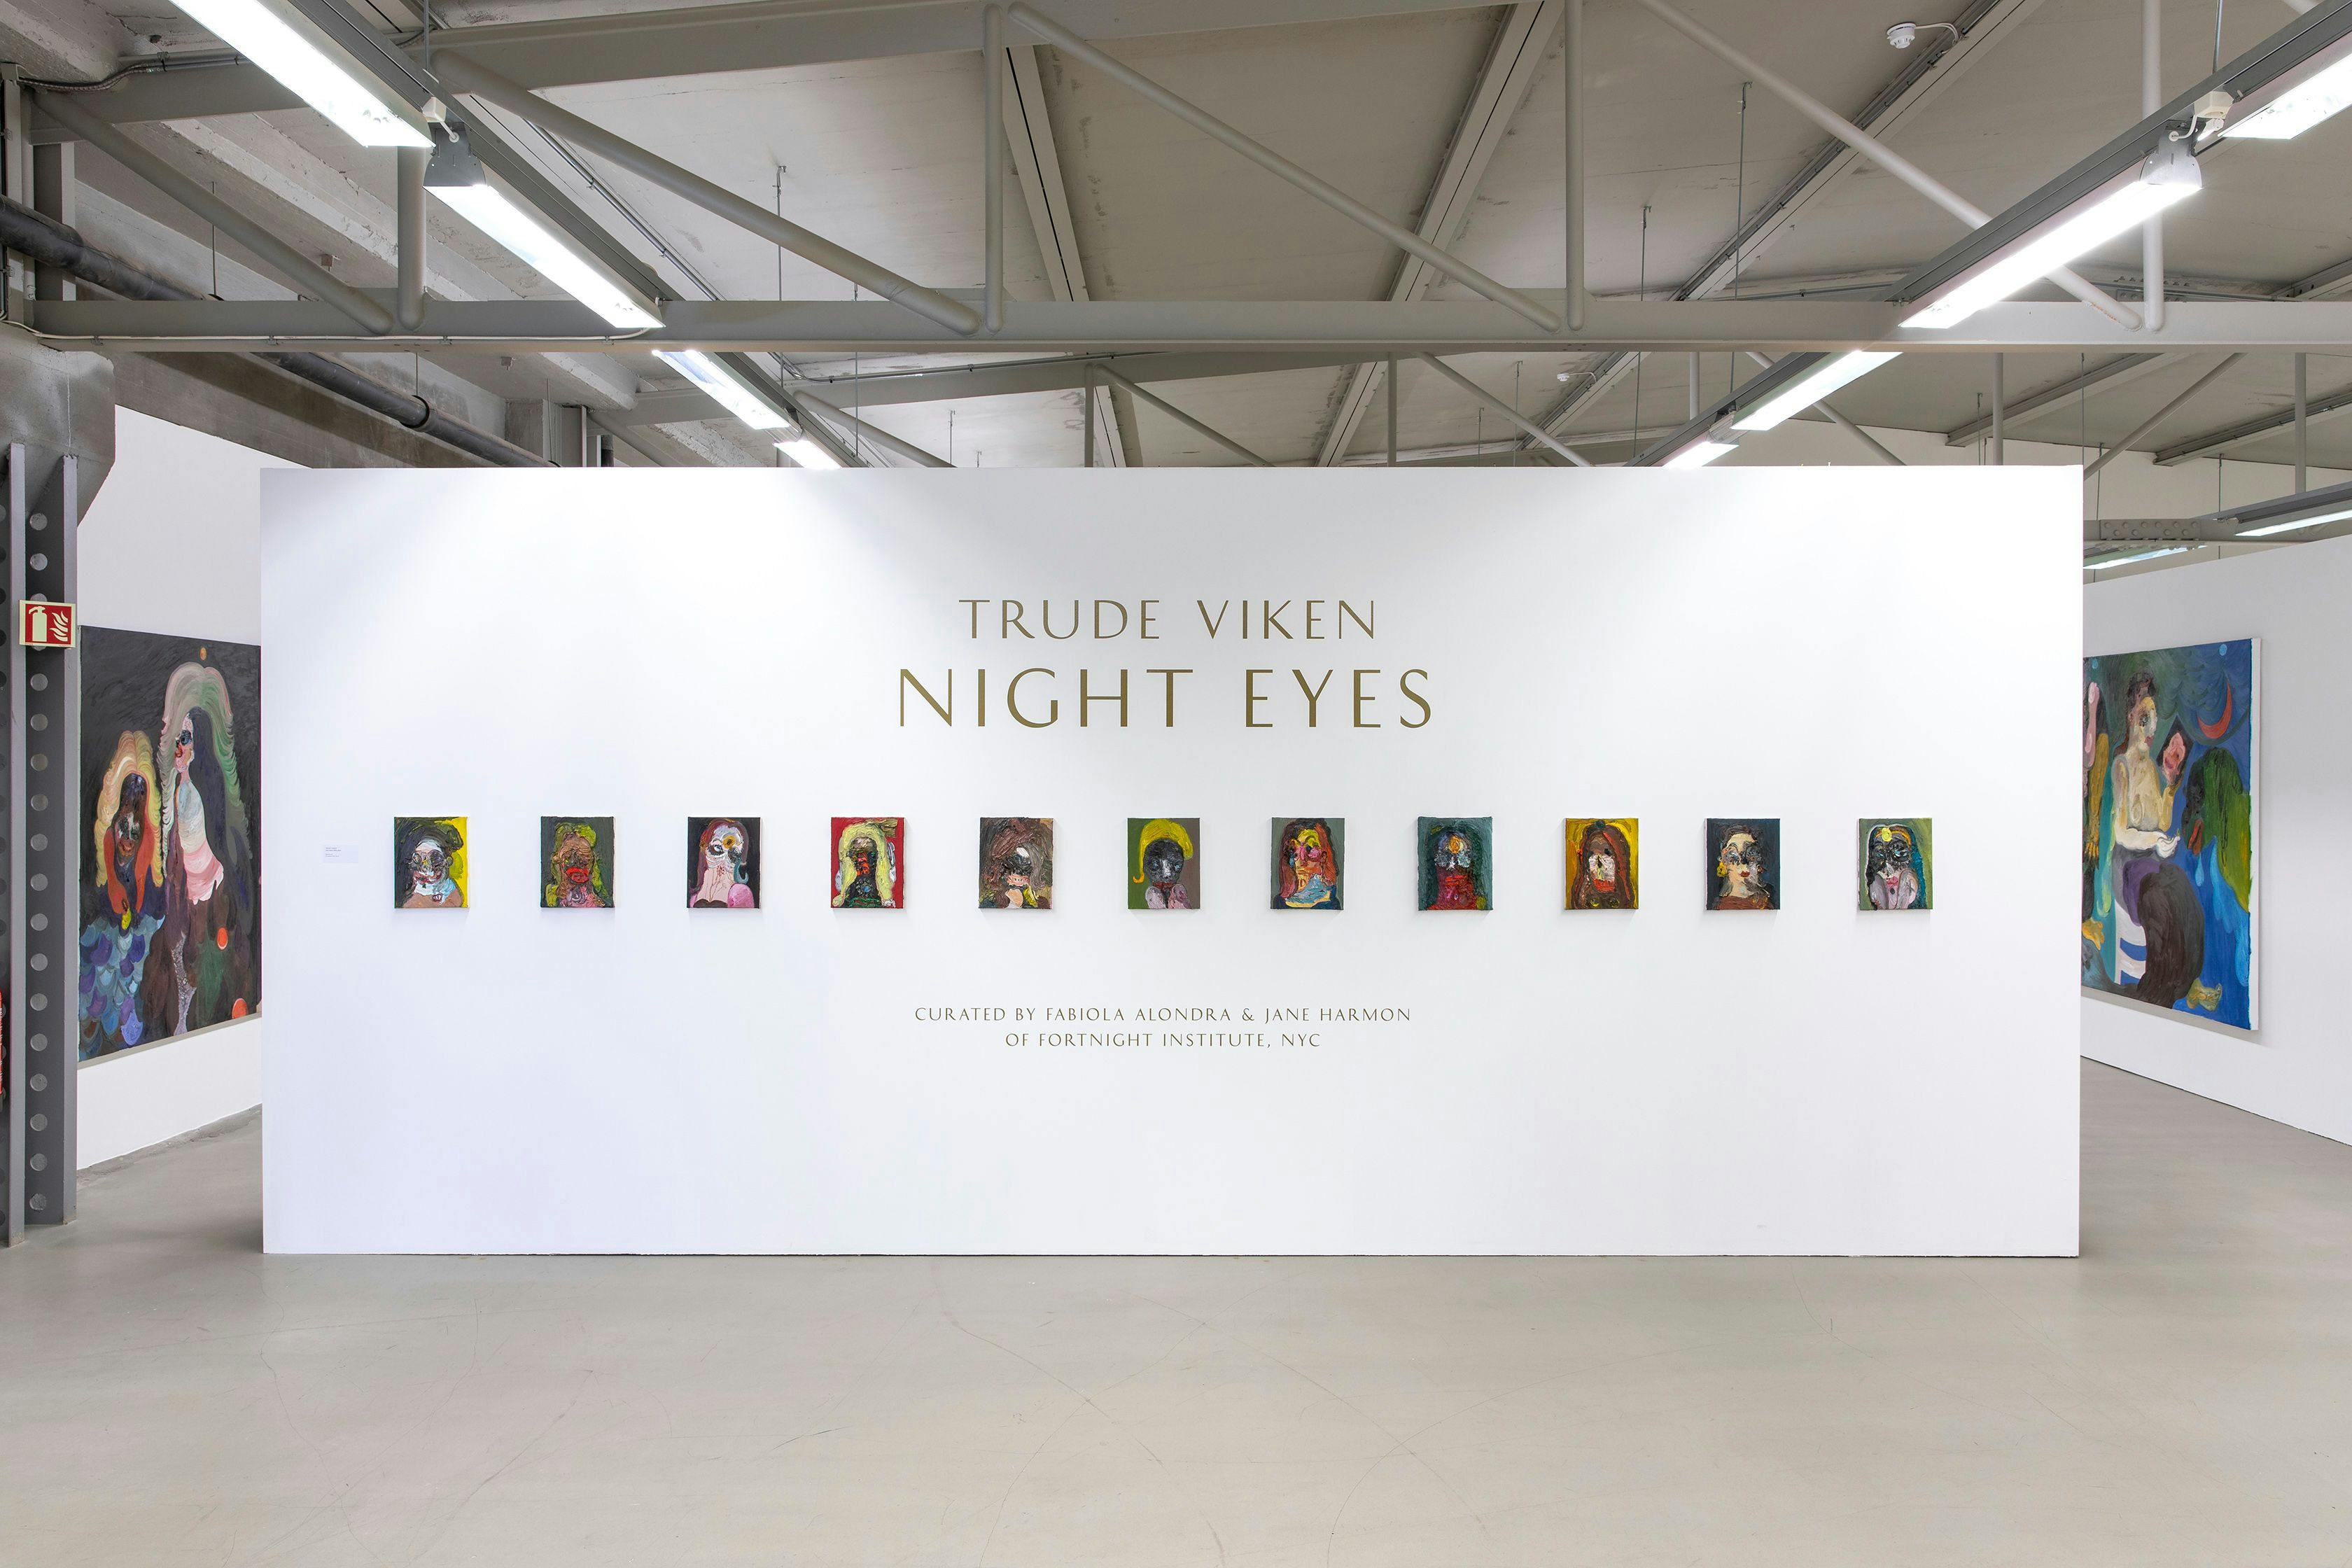 Installation photo from the exhibition TRUDE VIKEN: NIGHT EYES, 2021 / 01